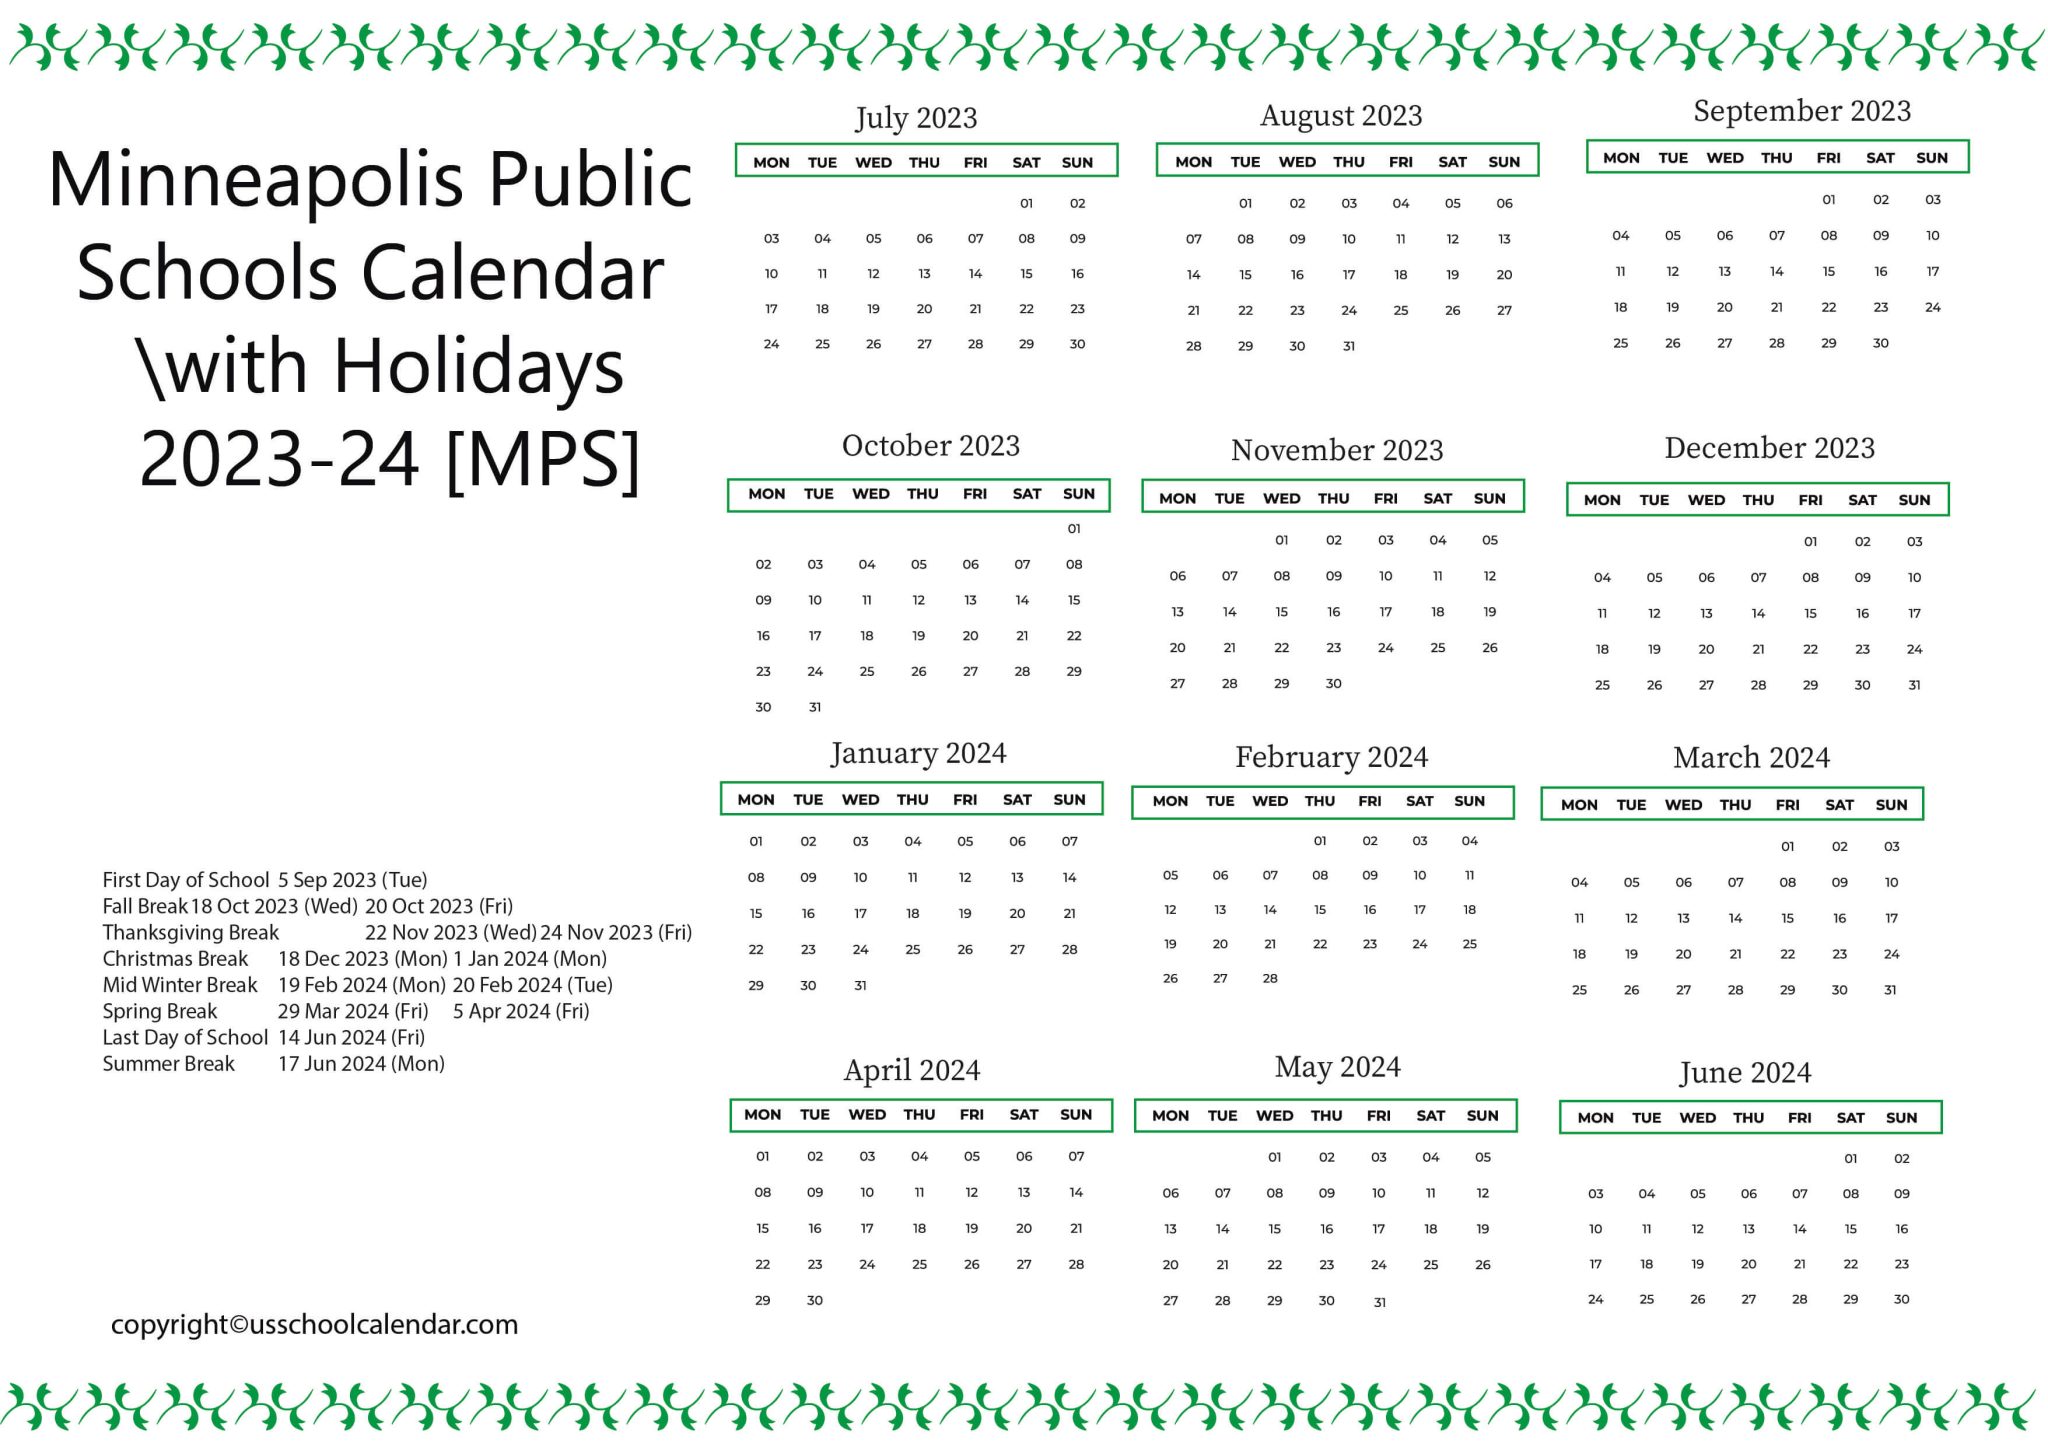 minneapolis-public-schools-calendar-with-holidays-2023-24-mps